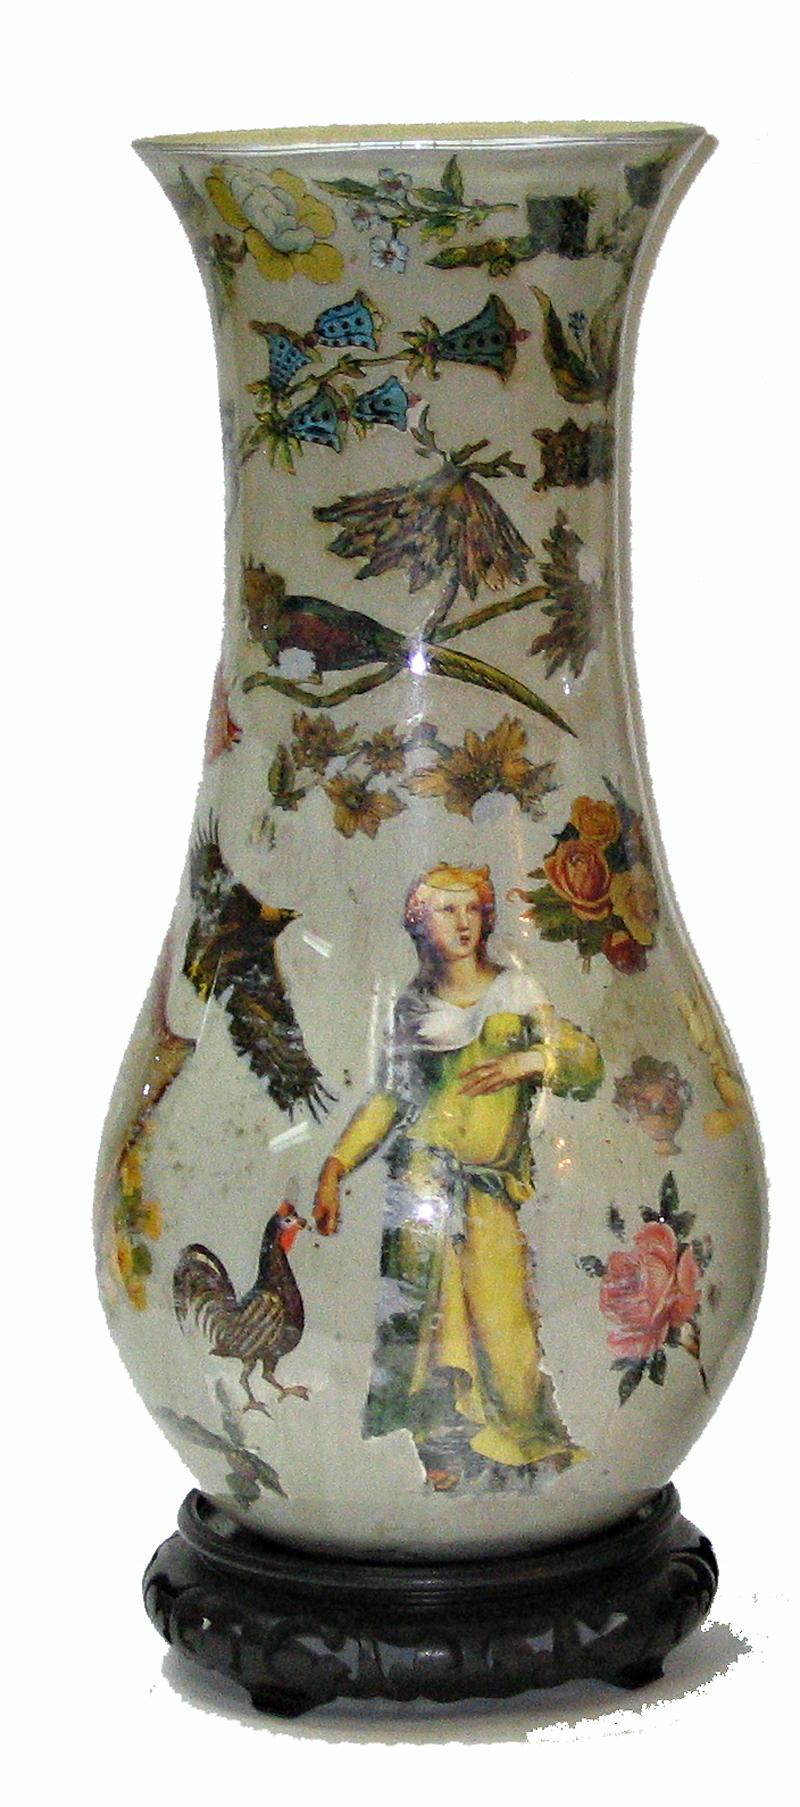 Pair of Reverse Polychrome Decorated Decalcomania Vases, Italian, circa 1860 (19. Jahrhundert)